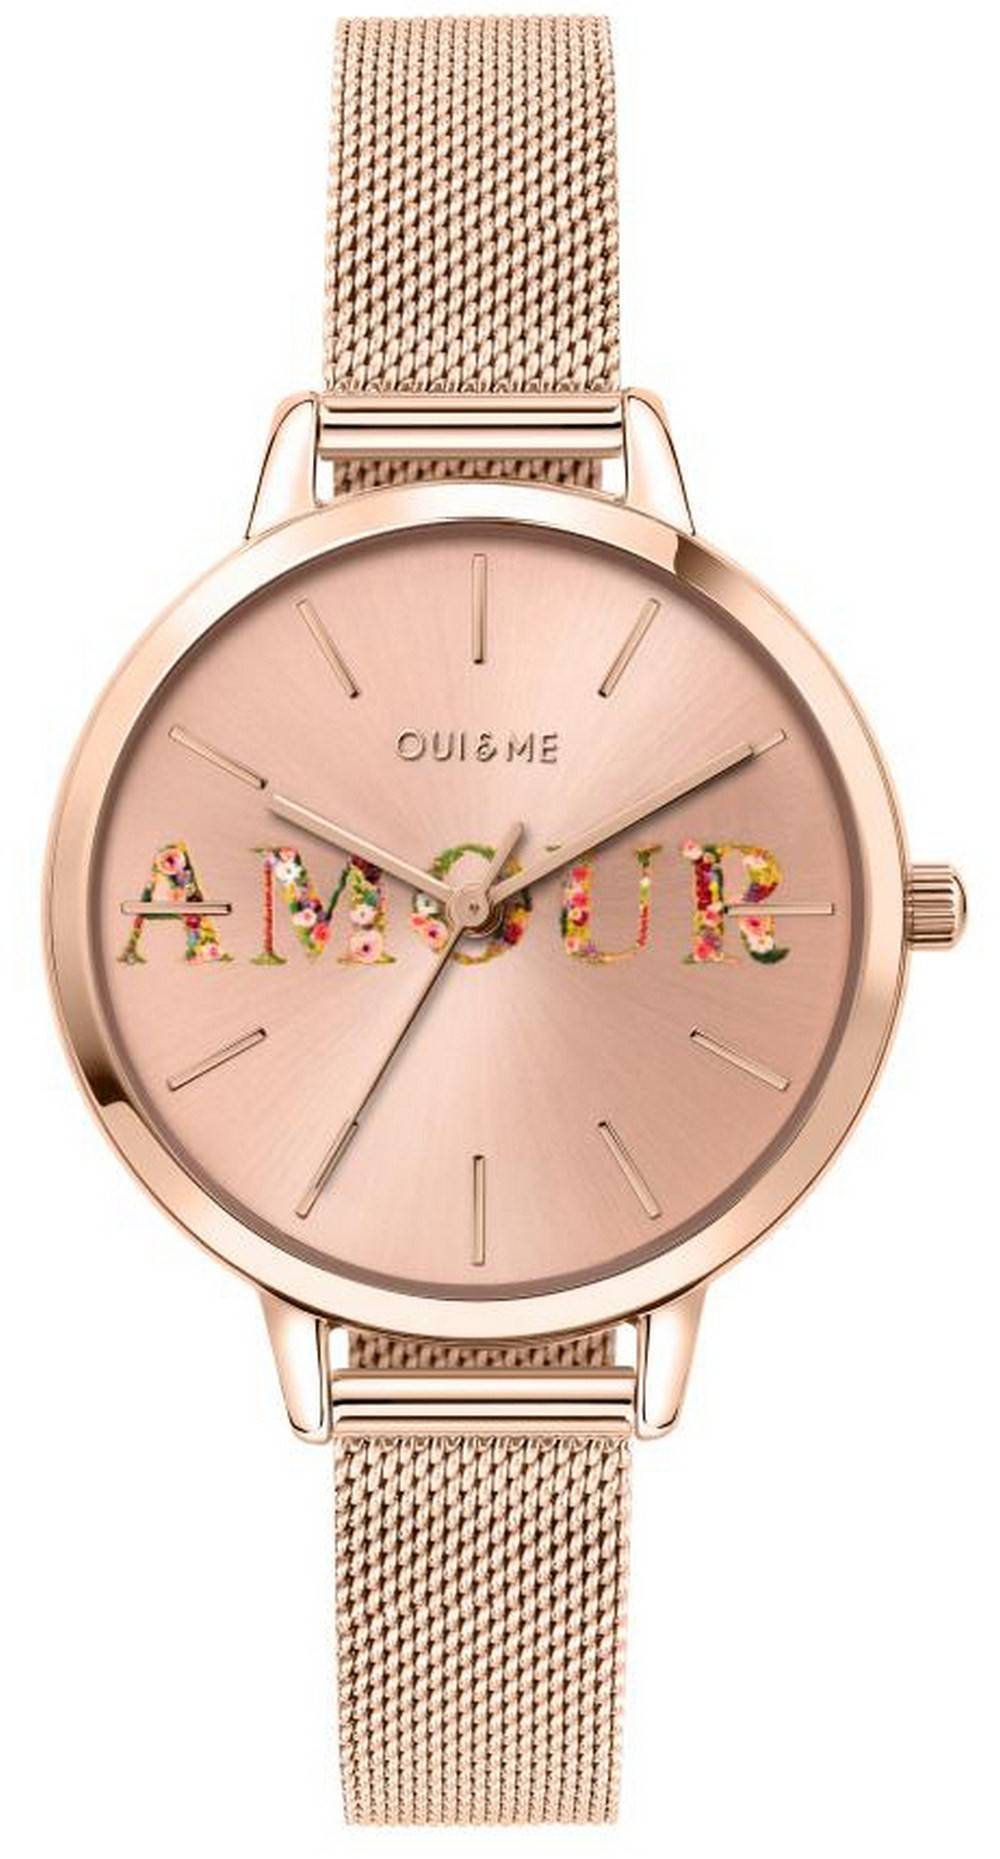 Oui & Me Fleurette Rose Gold Tone Stainless Steel Quartz ME010043 Women's Watch